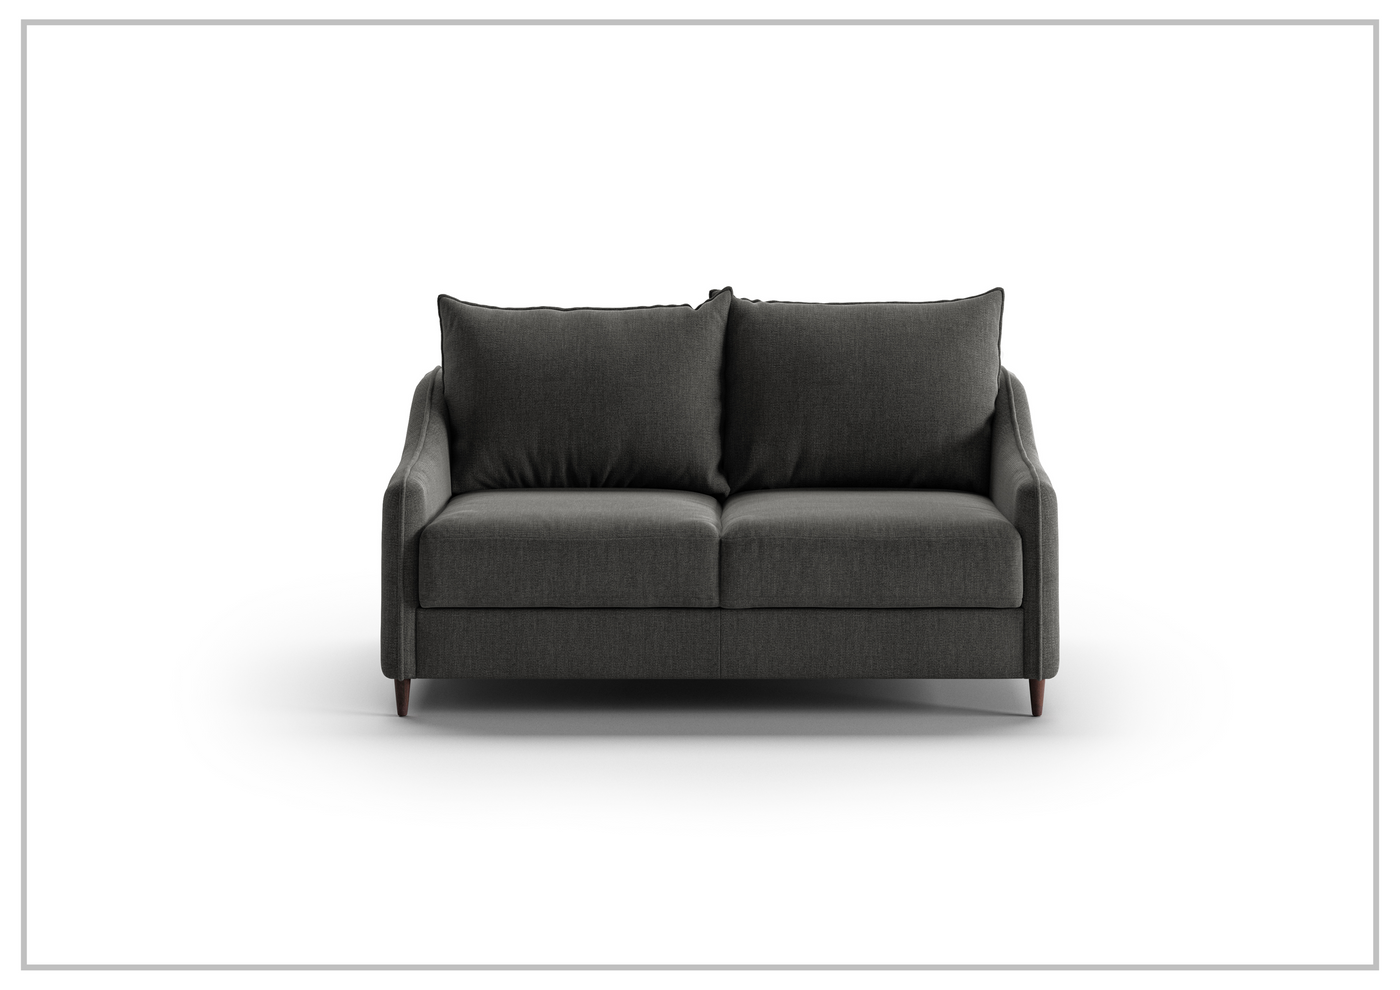 Luonto Ethos Fabric Full XL Sleeper Sofa with Nest Mechanism